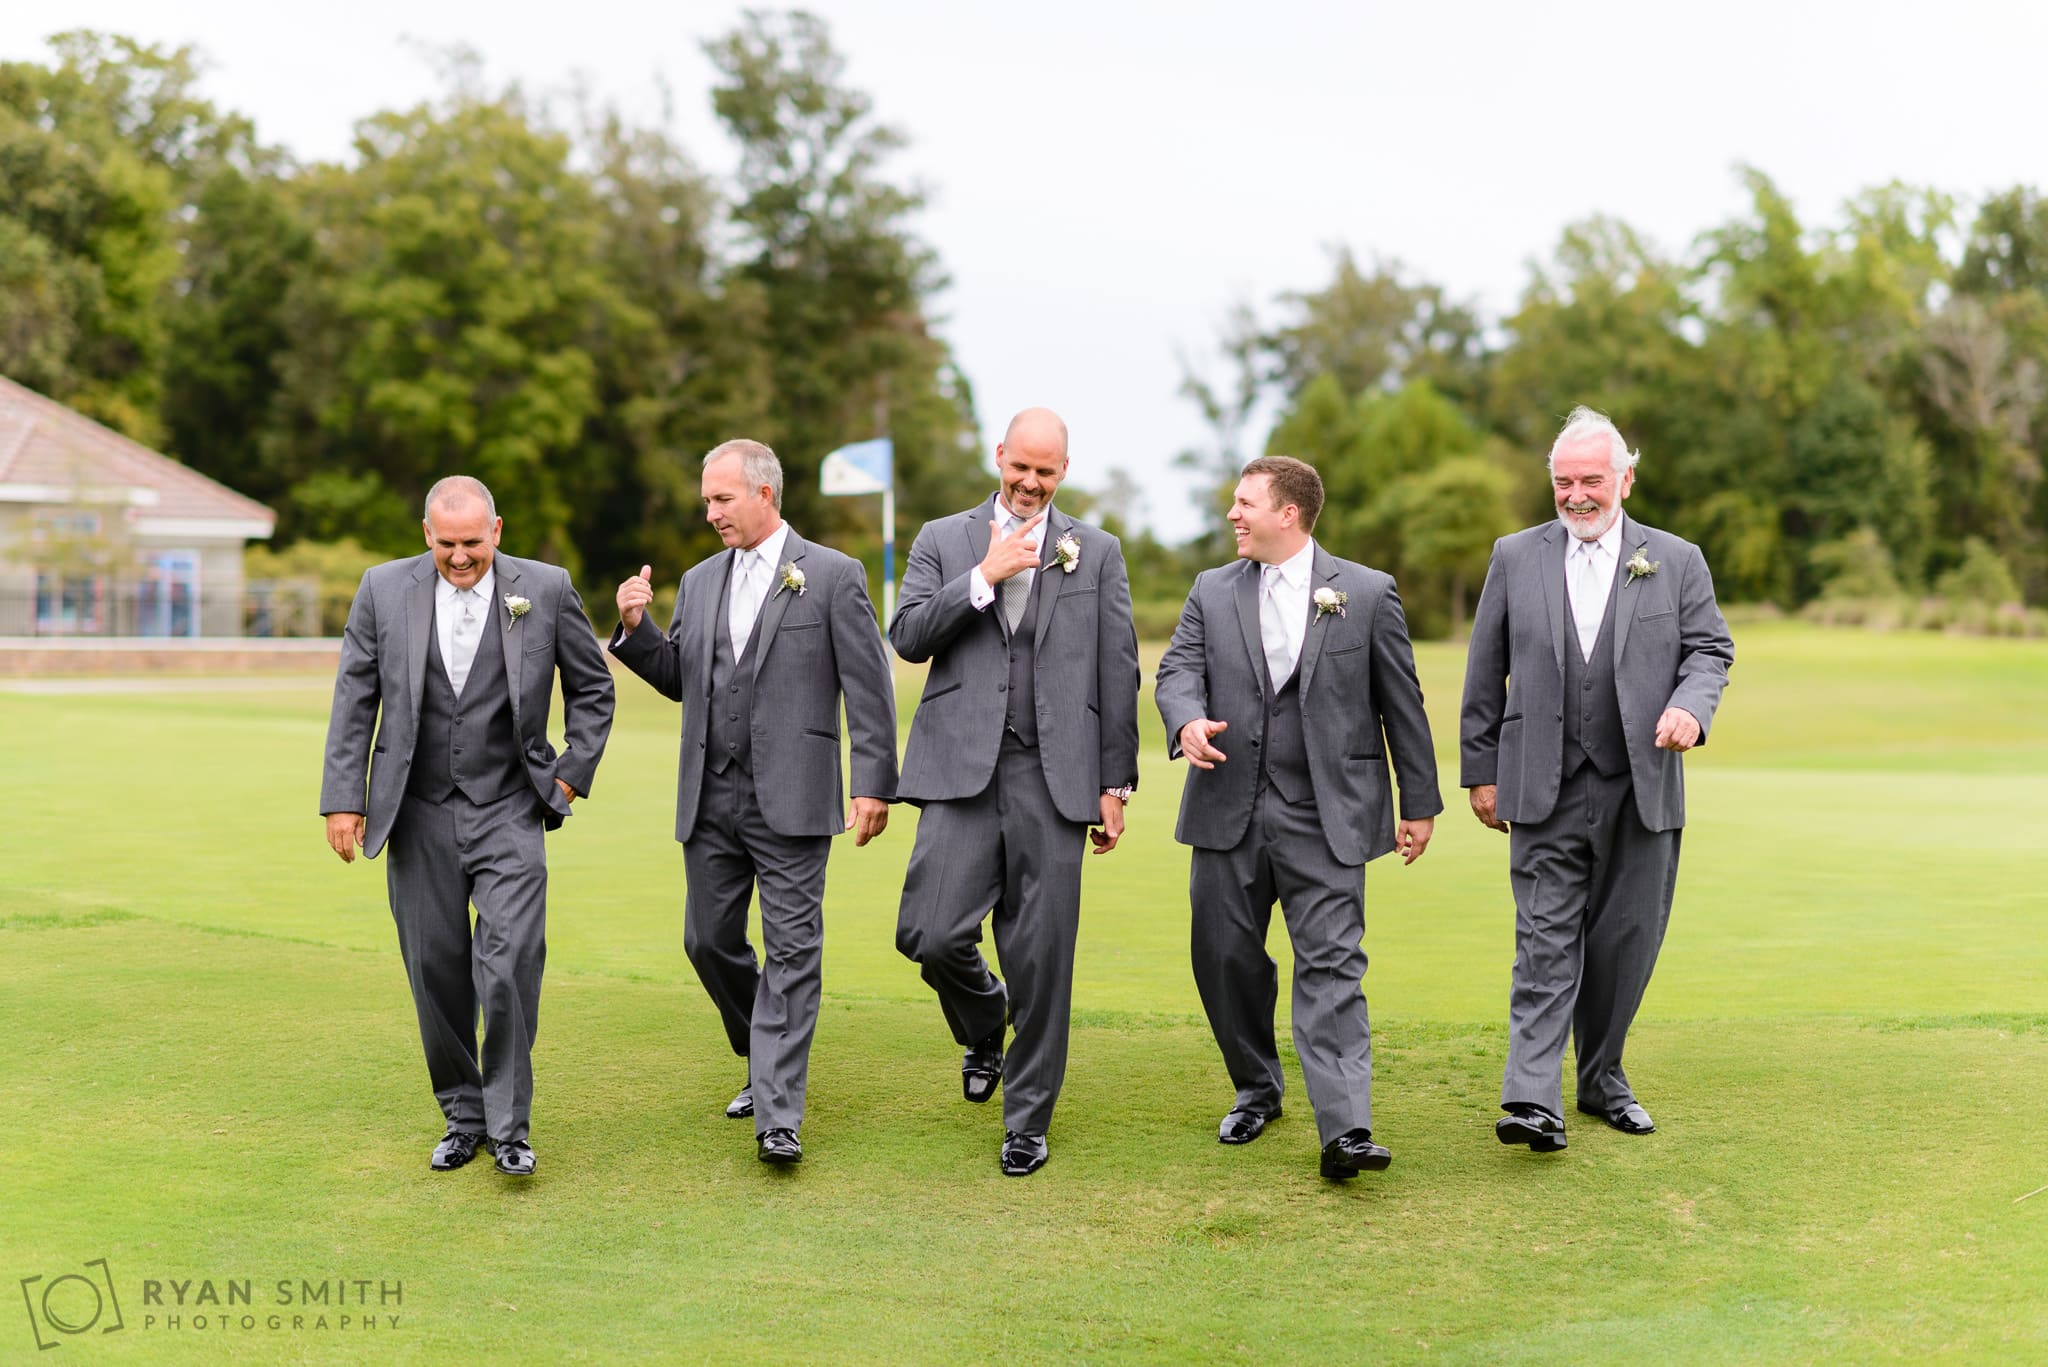 Groomsmen walking down the golf course - Members Club at Grande Dunes